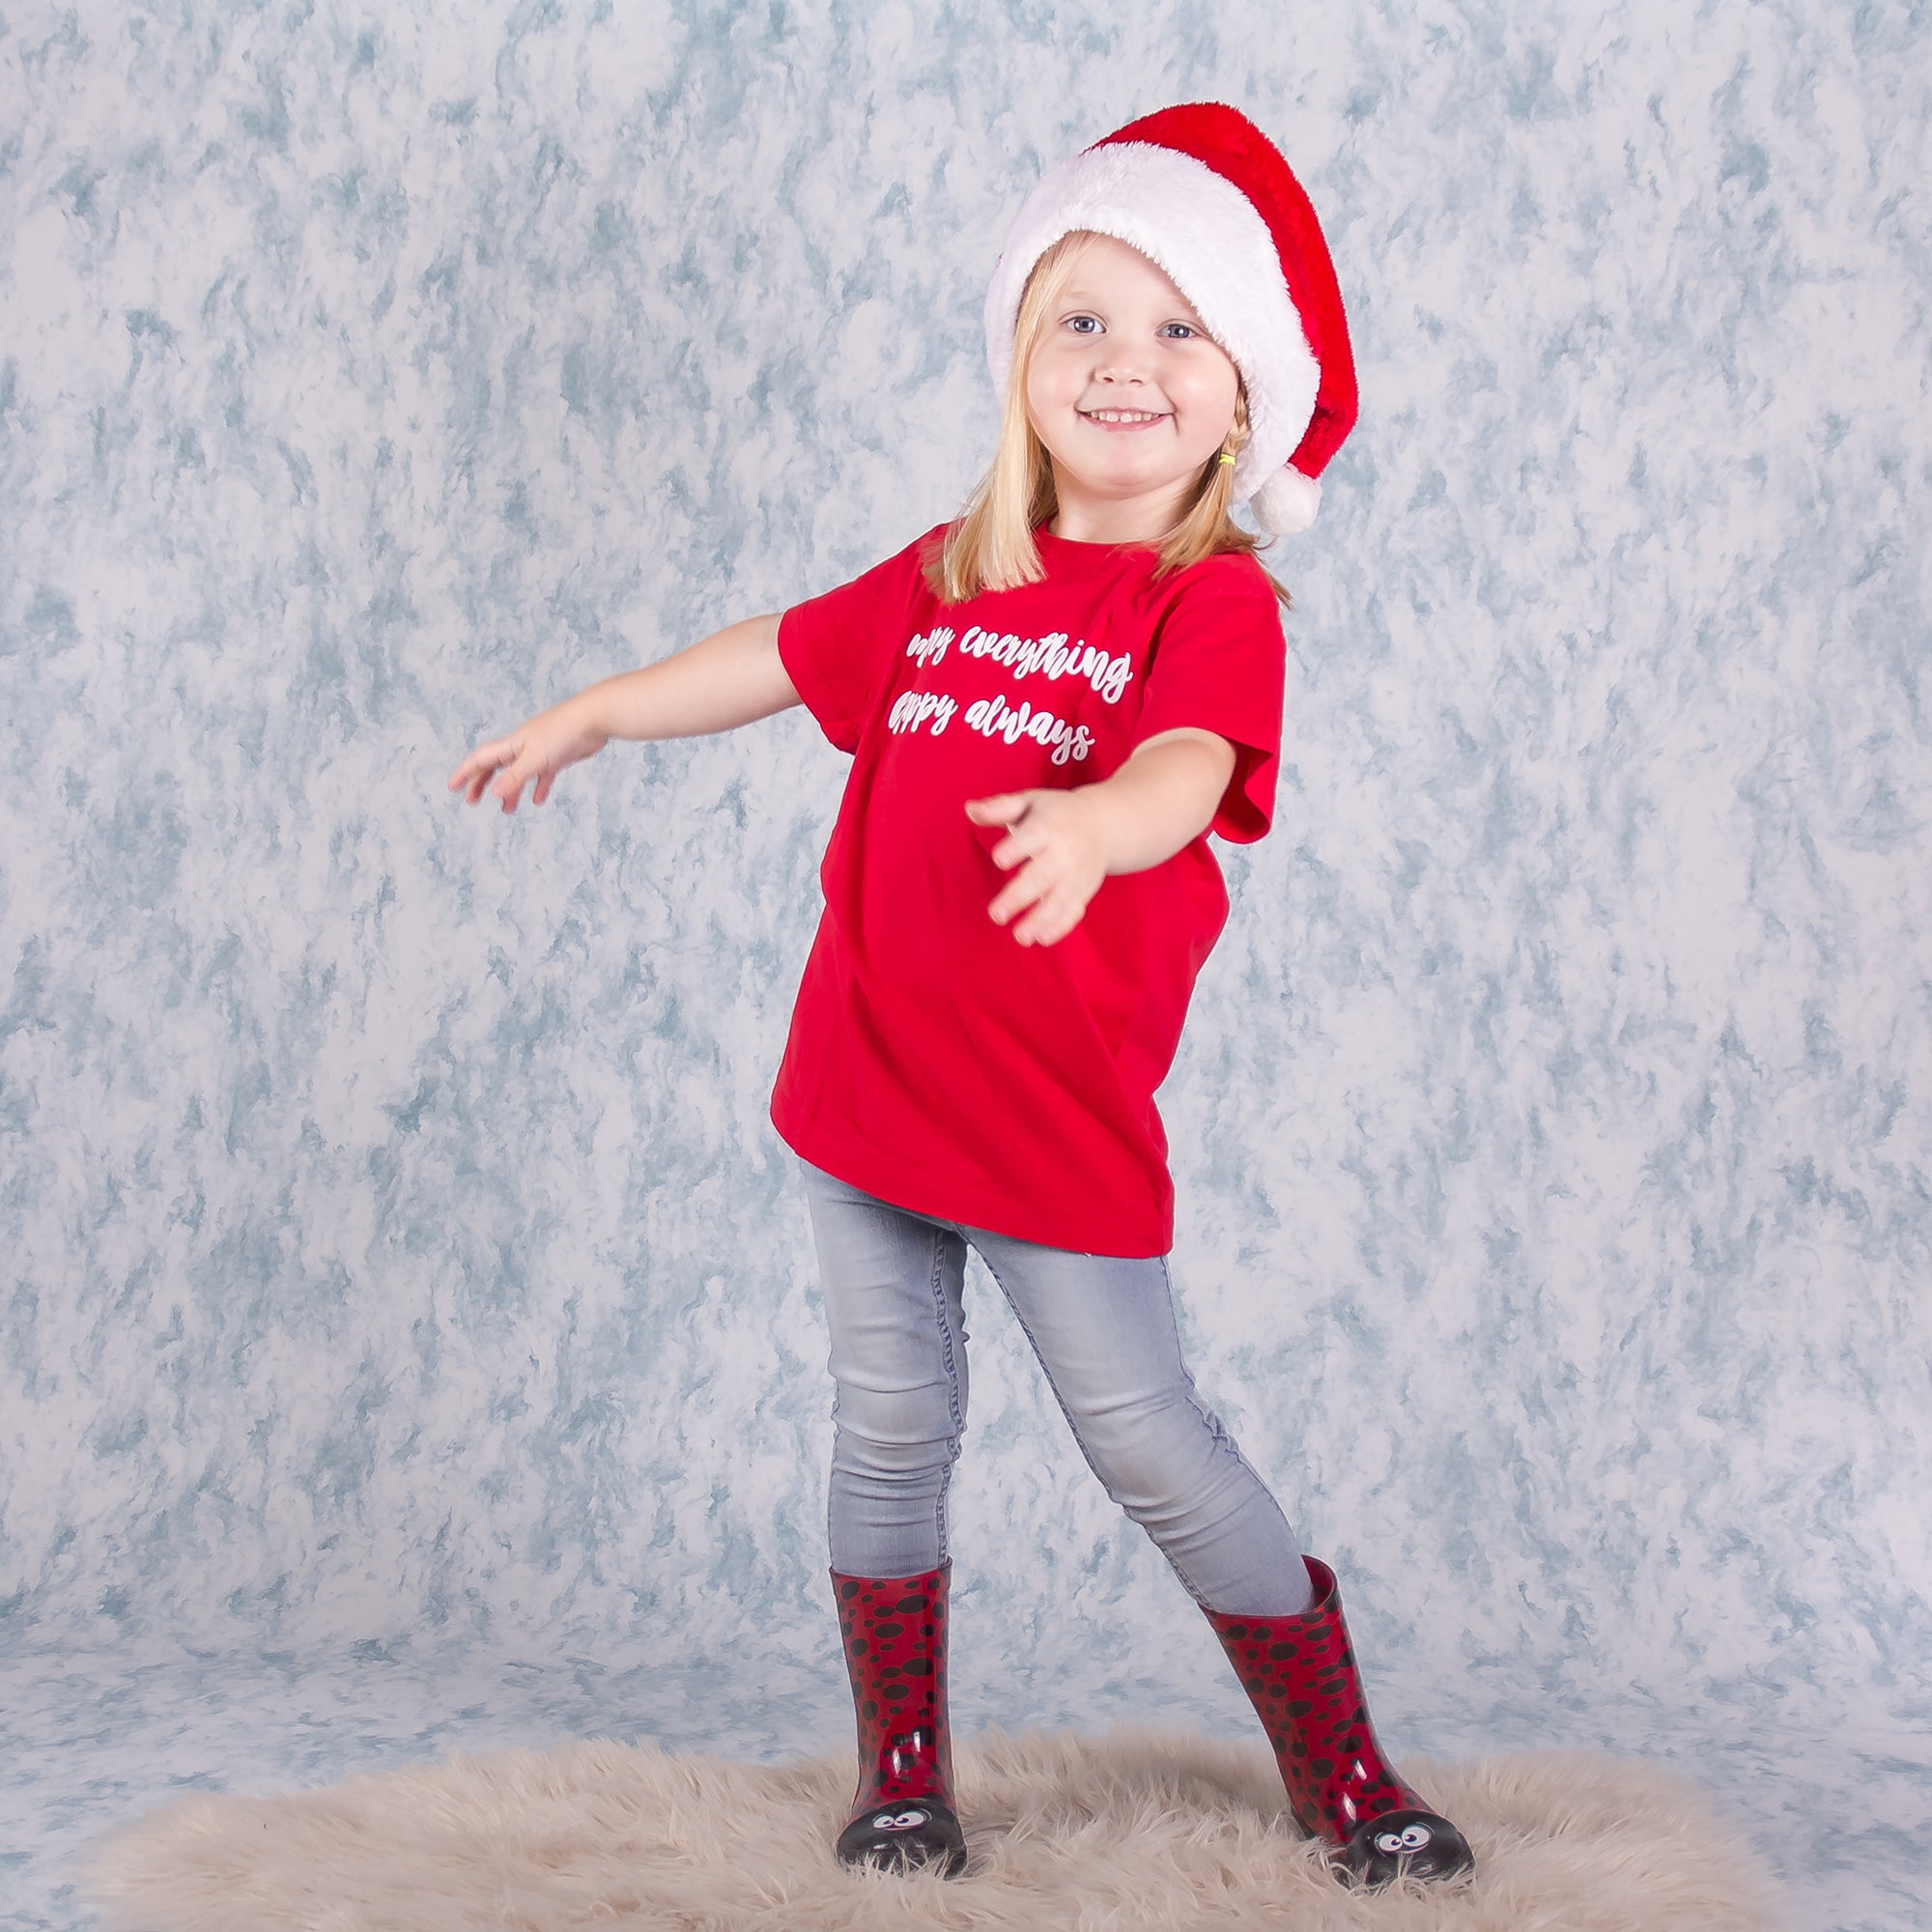 'Merry everything, Happy always' kids shortsleeve shirt